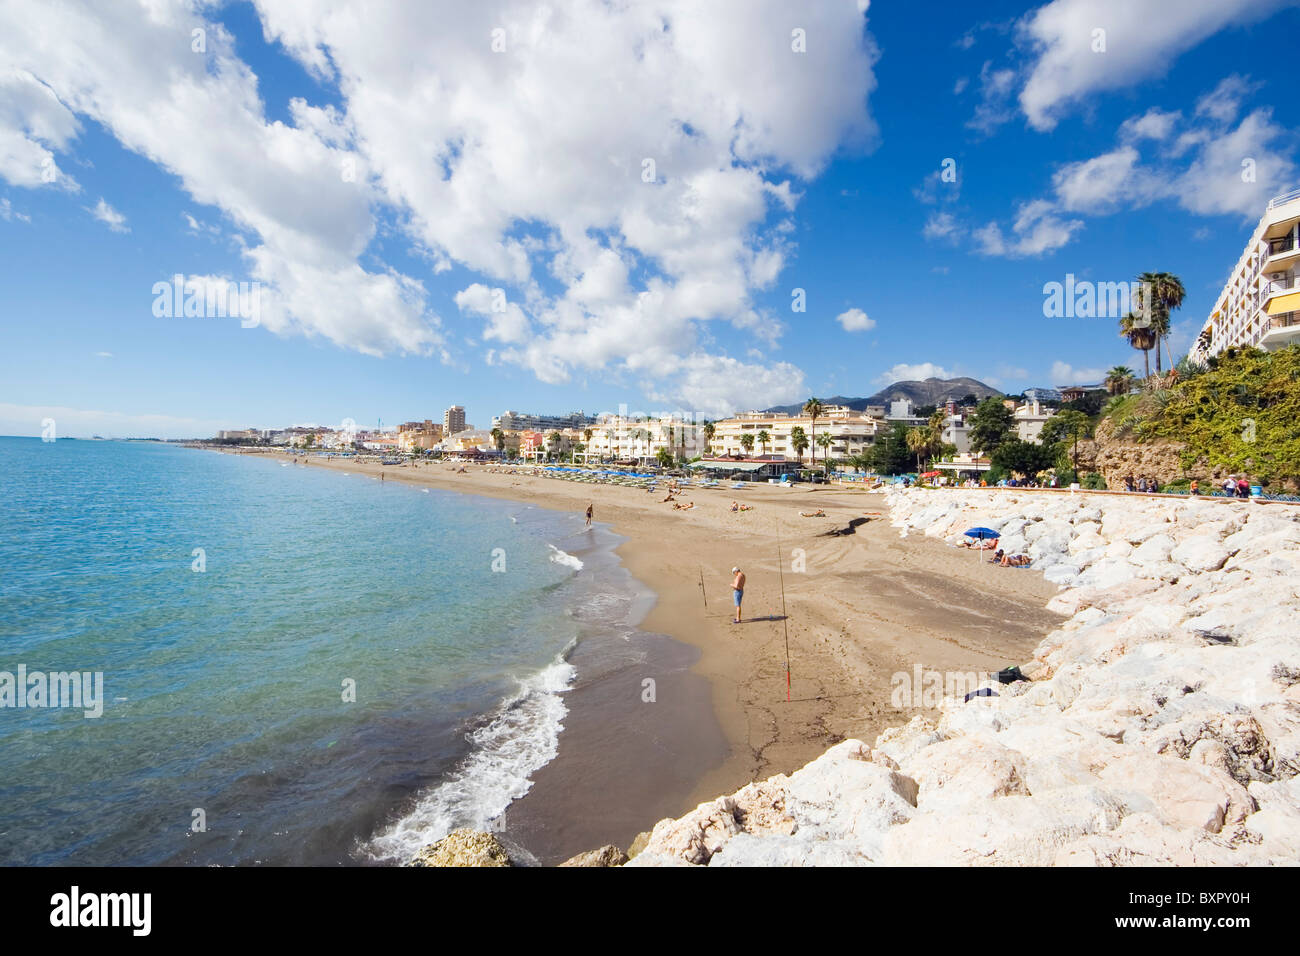 View of La Carihuela beach and promenade. Torremolinos, Malaga, Costa del Sol, Spain. Stock Photo